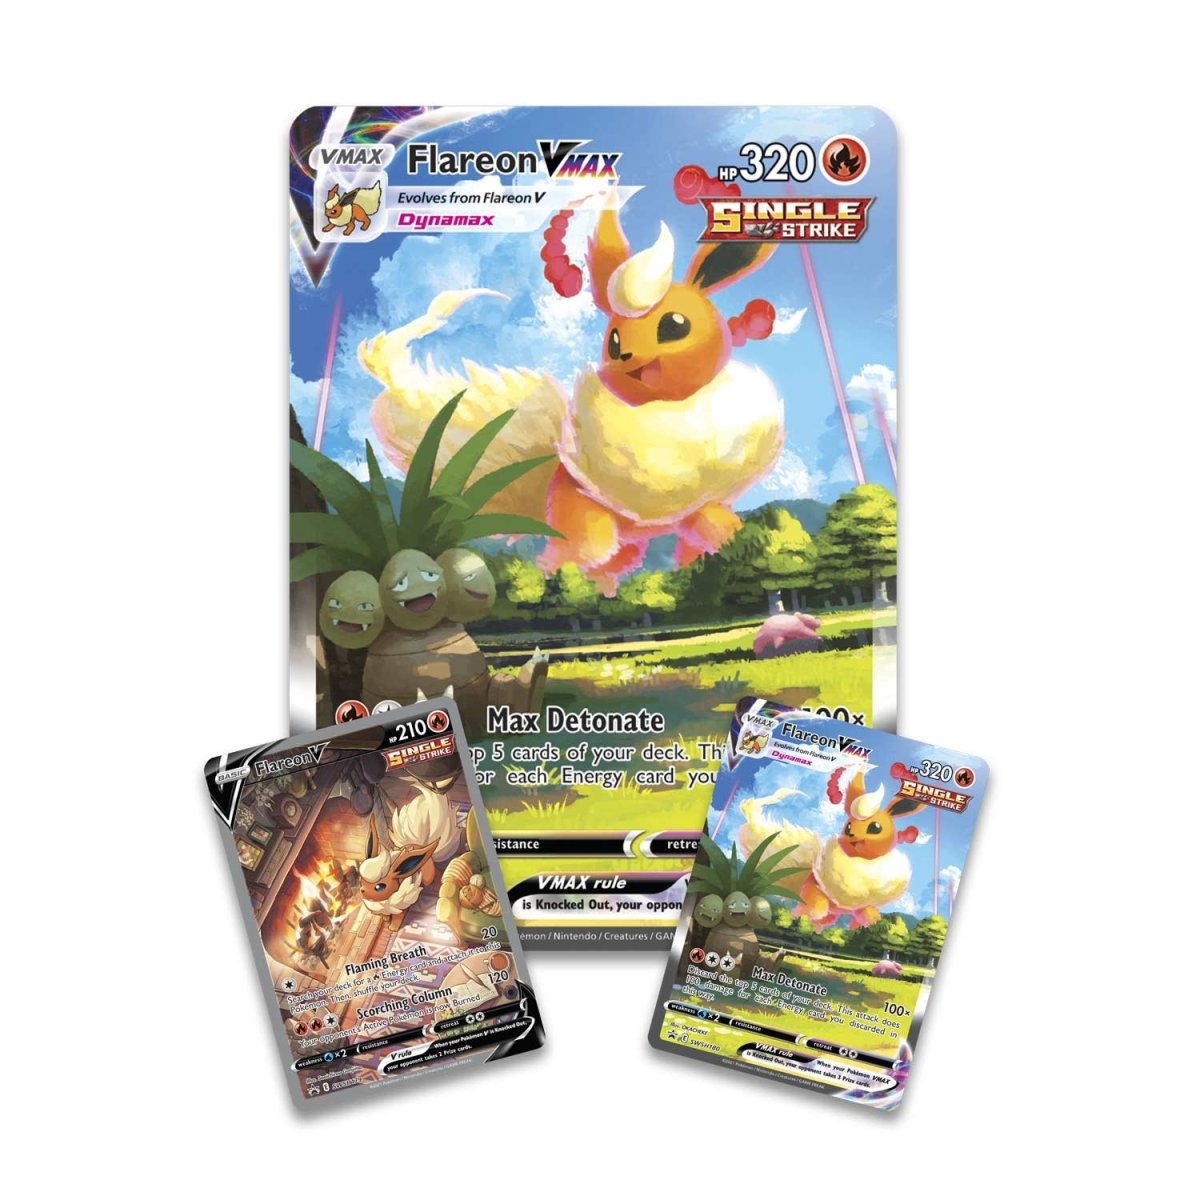 Pokémon TCG - Flareon VMAX Premium Collection